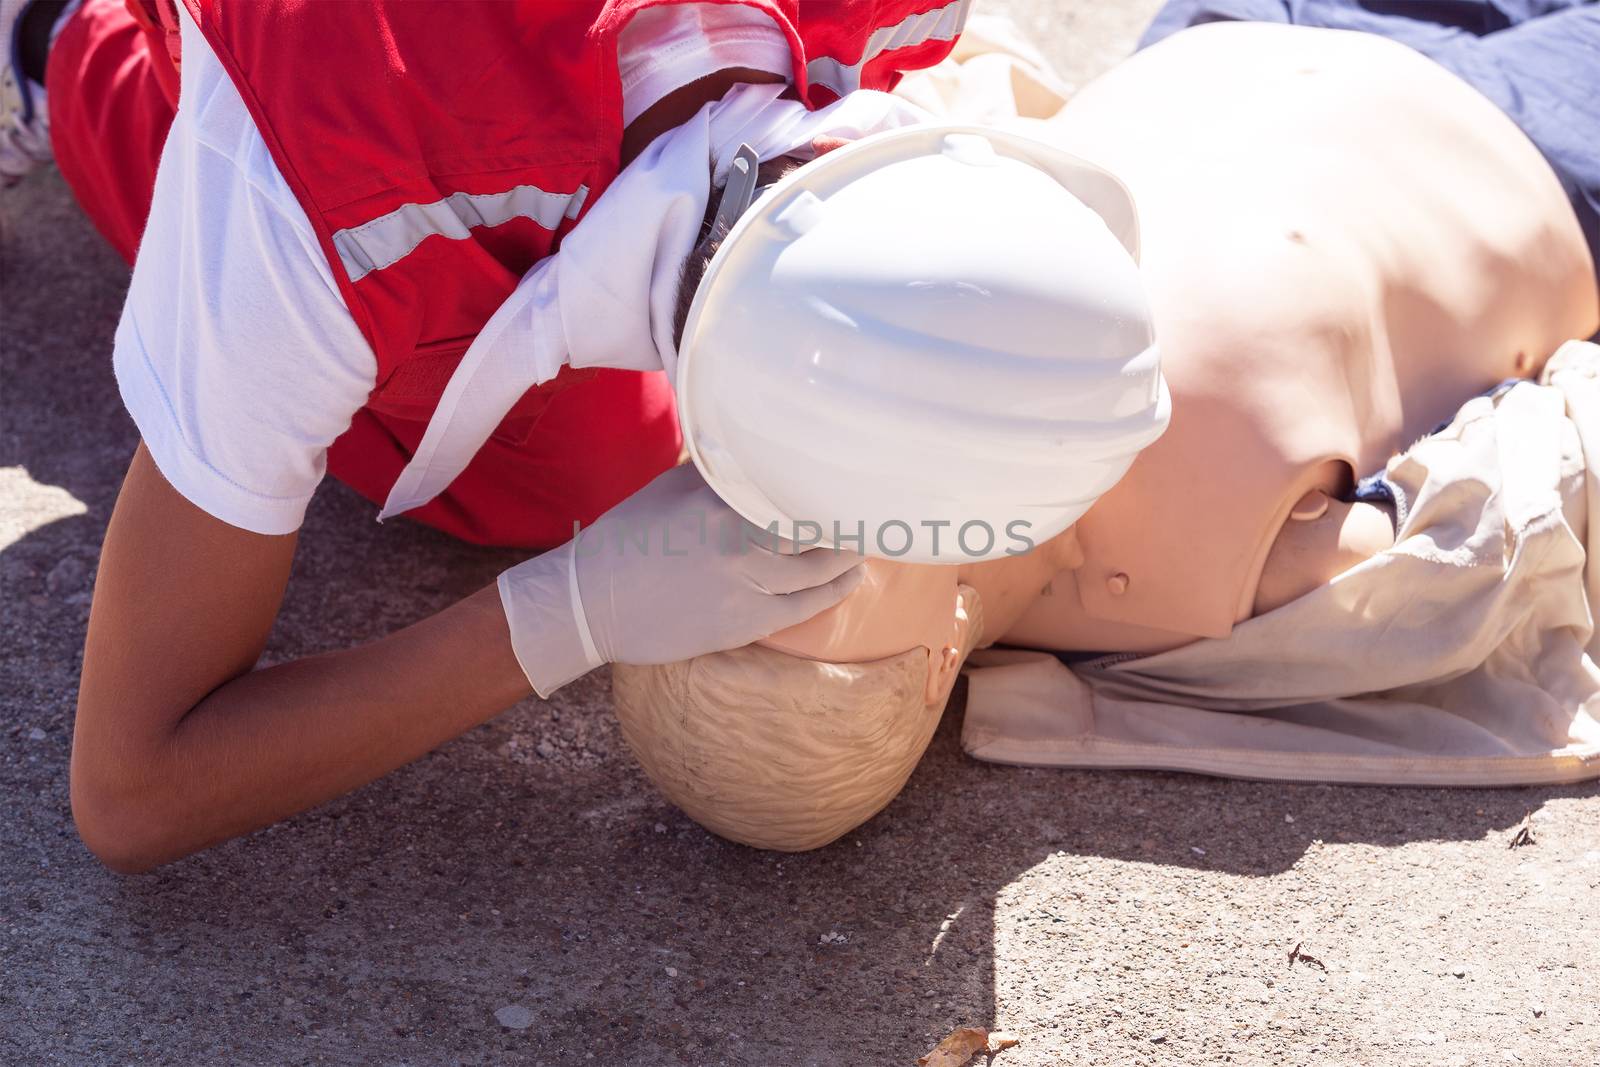 First aid training detail. Cardiopulmonary resuscitation - CPR.